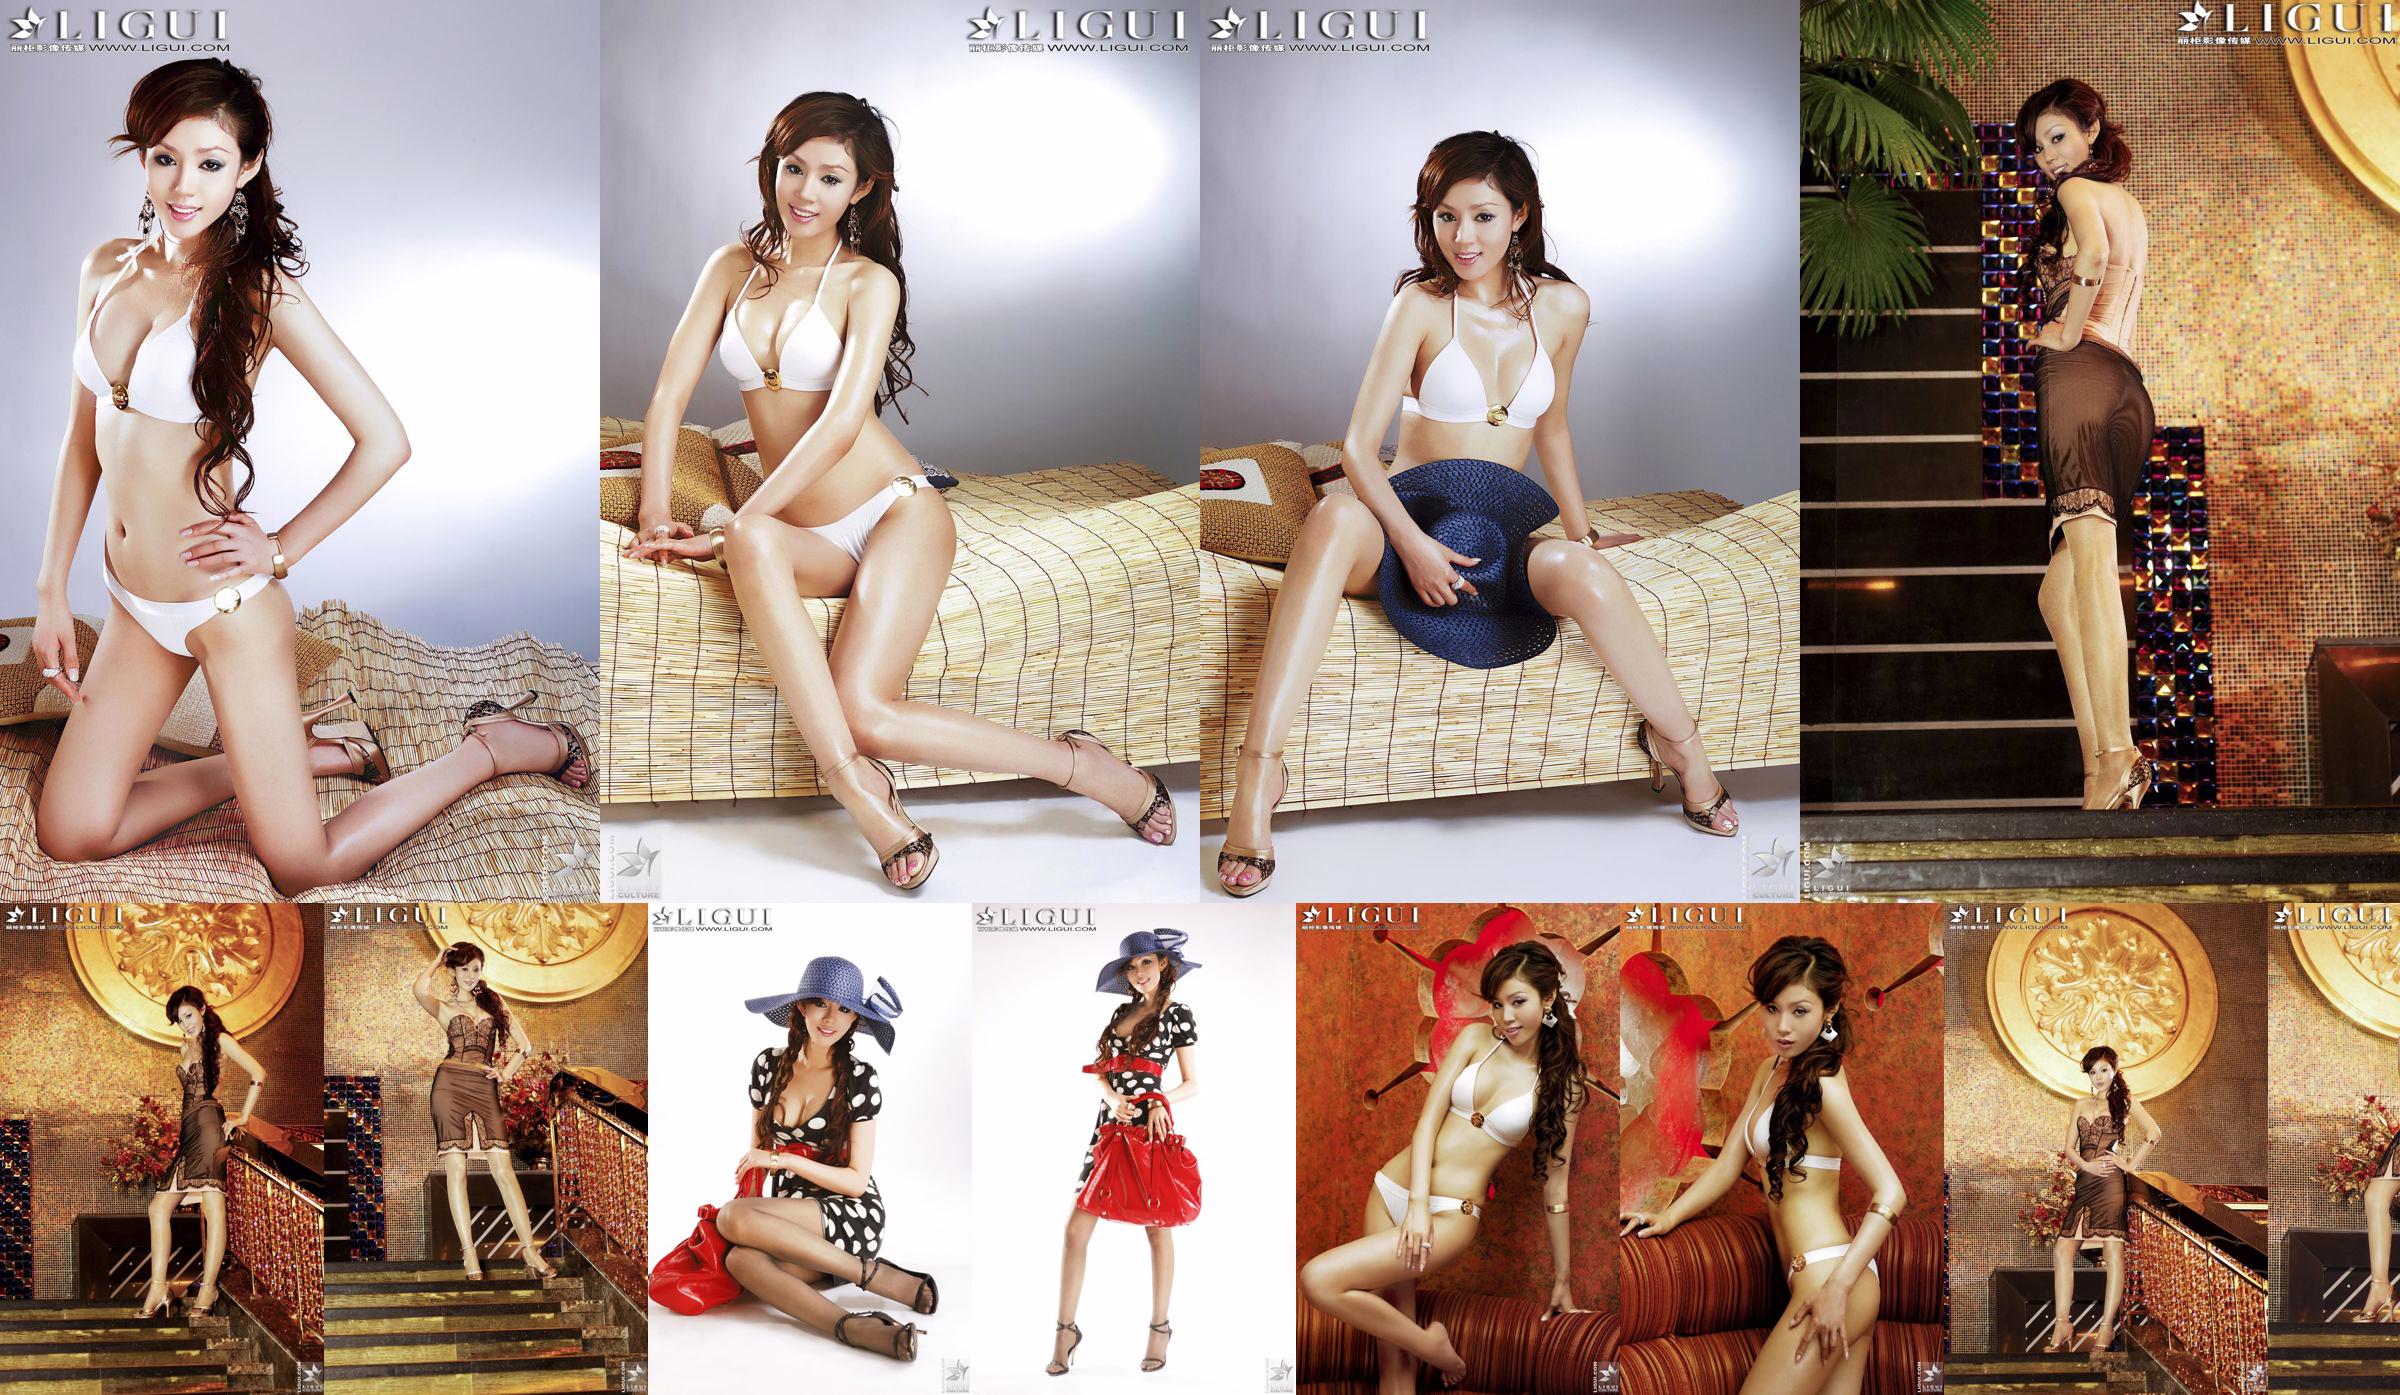 [丽 柜 LiGui] Model Yao Jinjin's "Bikini + Jurk" Mooie benen en zijdeachtige voeten Foto Foto No.c3d6a7 Pagina 5